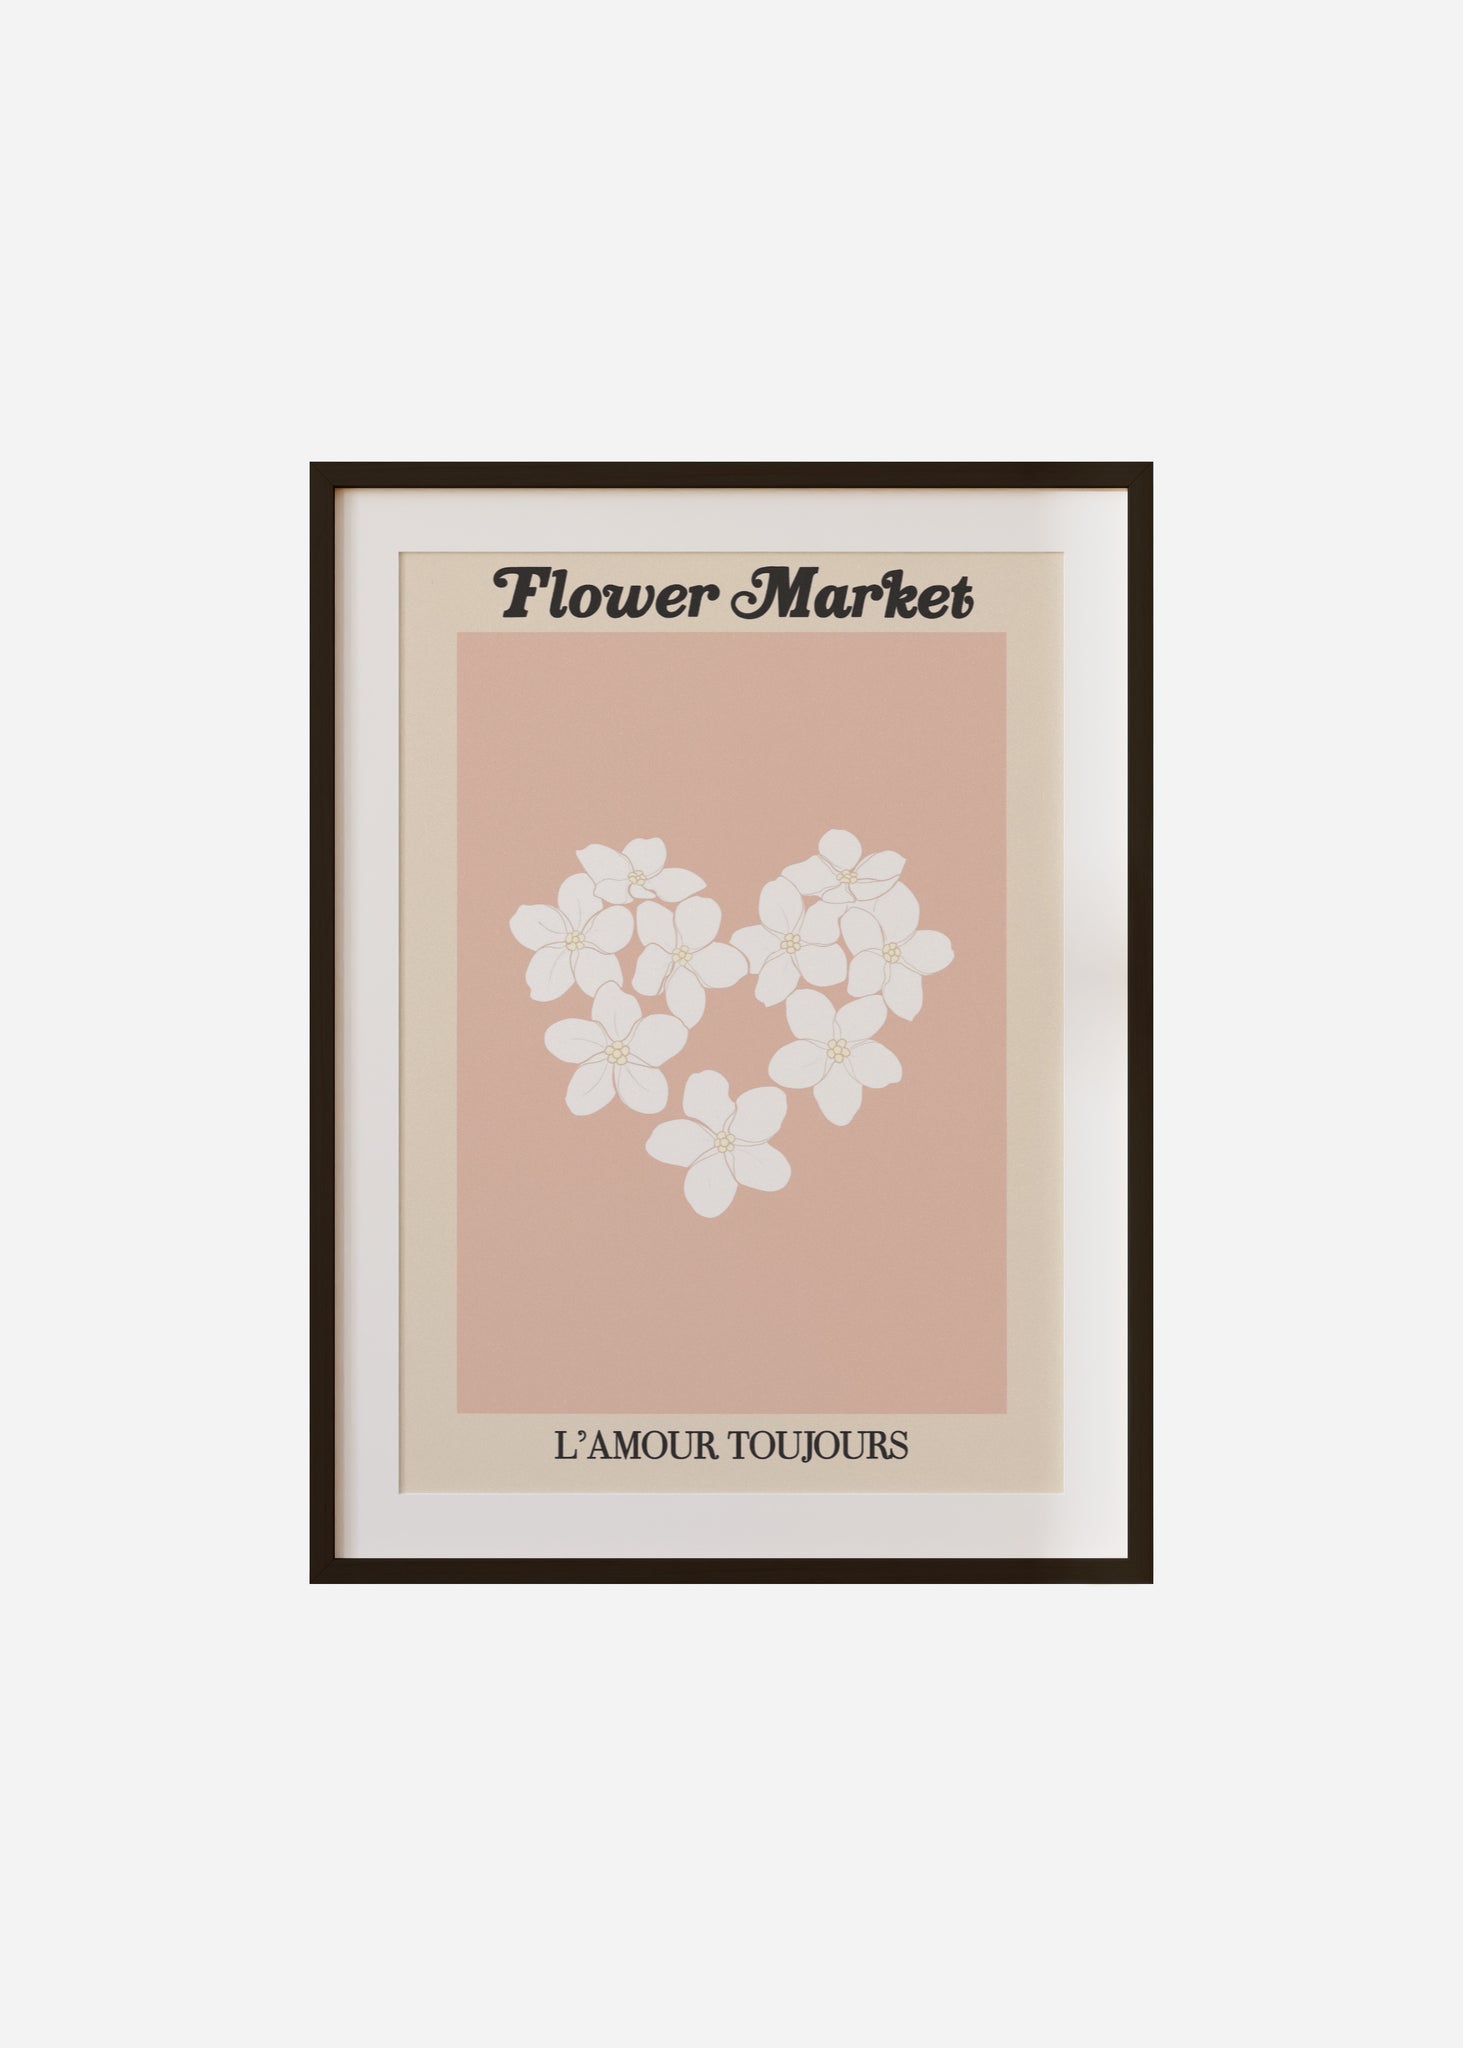 flower market / l'amour toujours Framed & Mounted Print